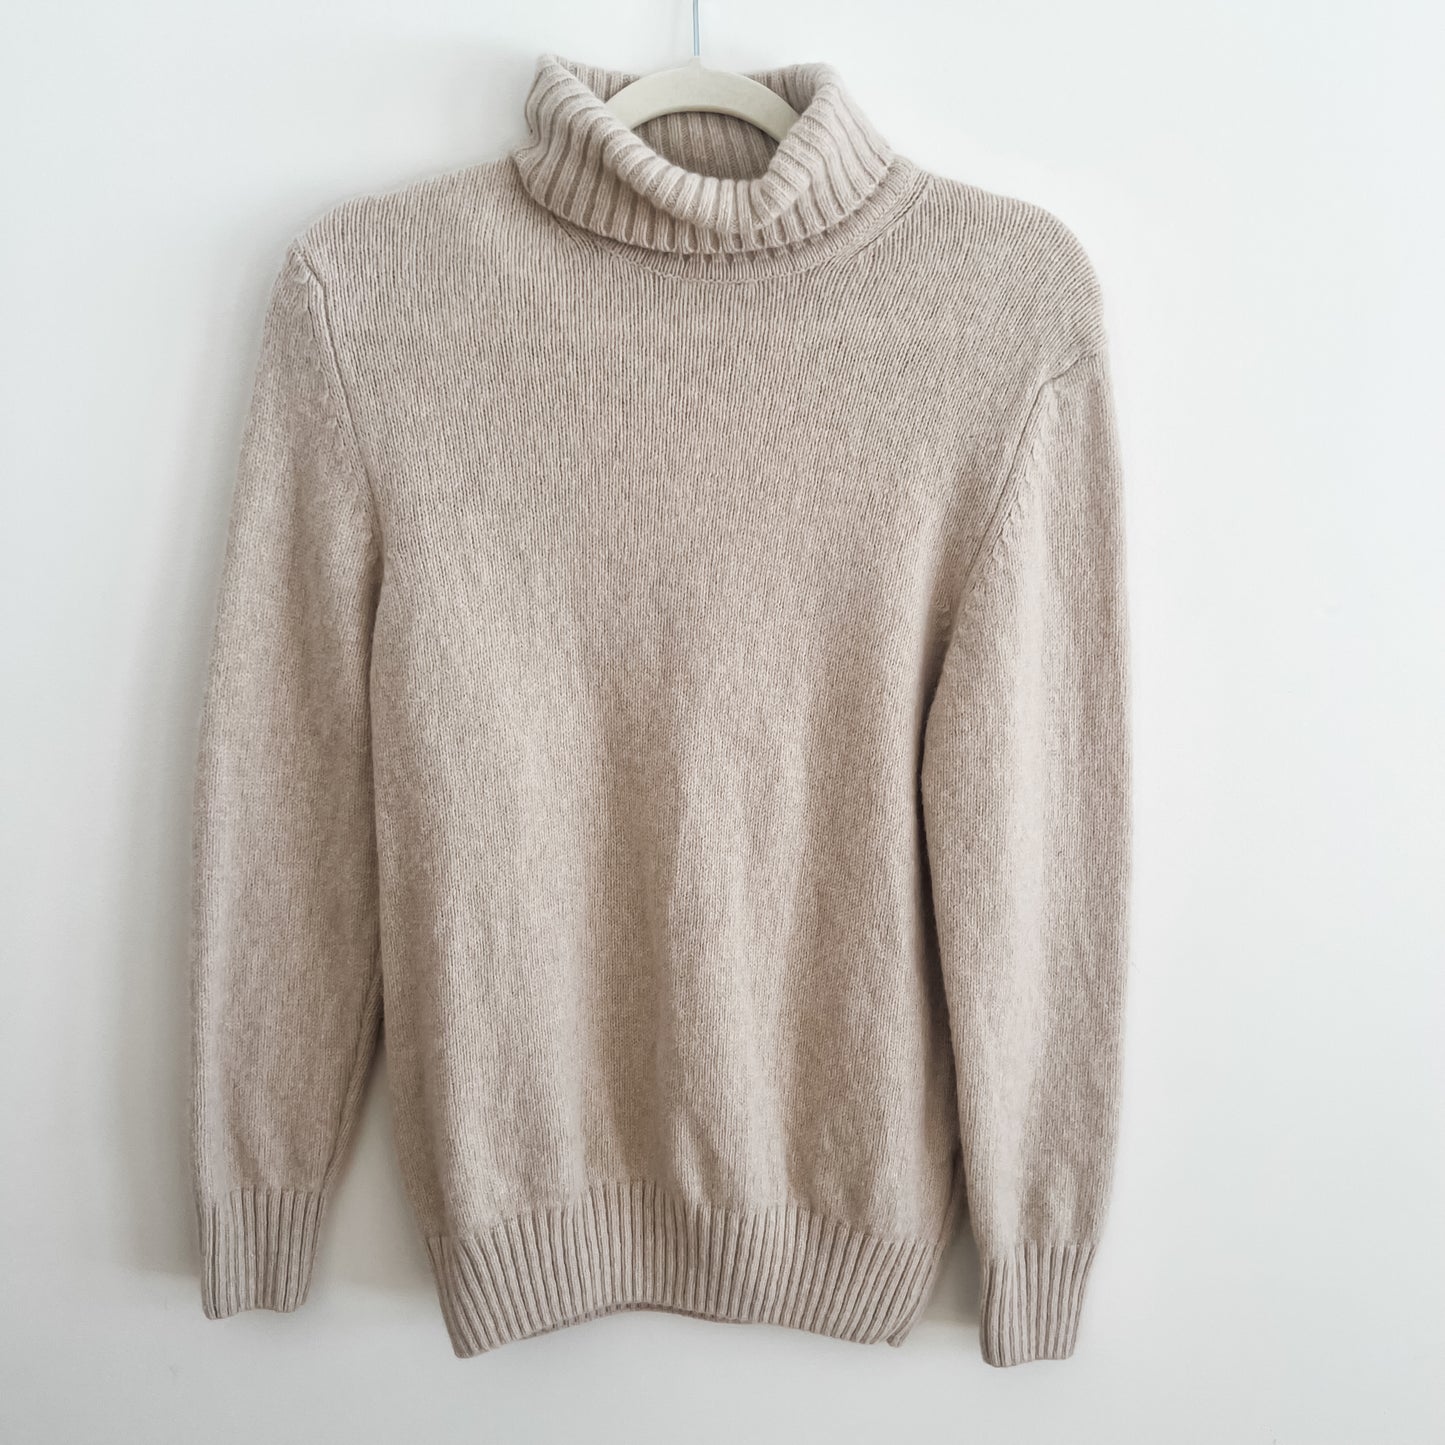 Zara Mockneck Sweater (M)